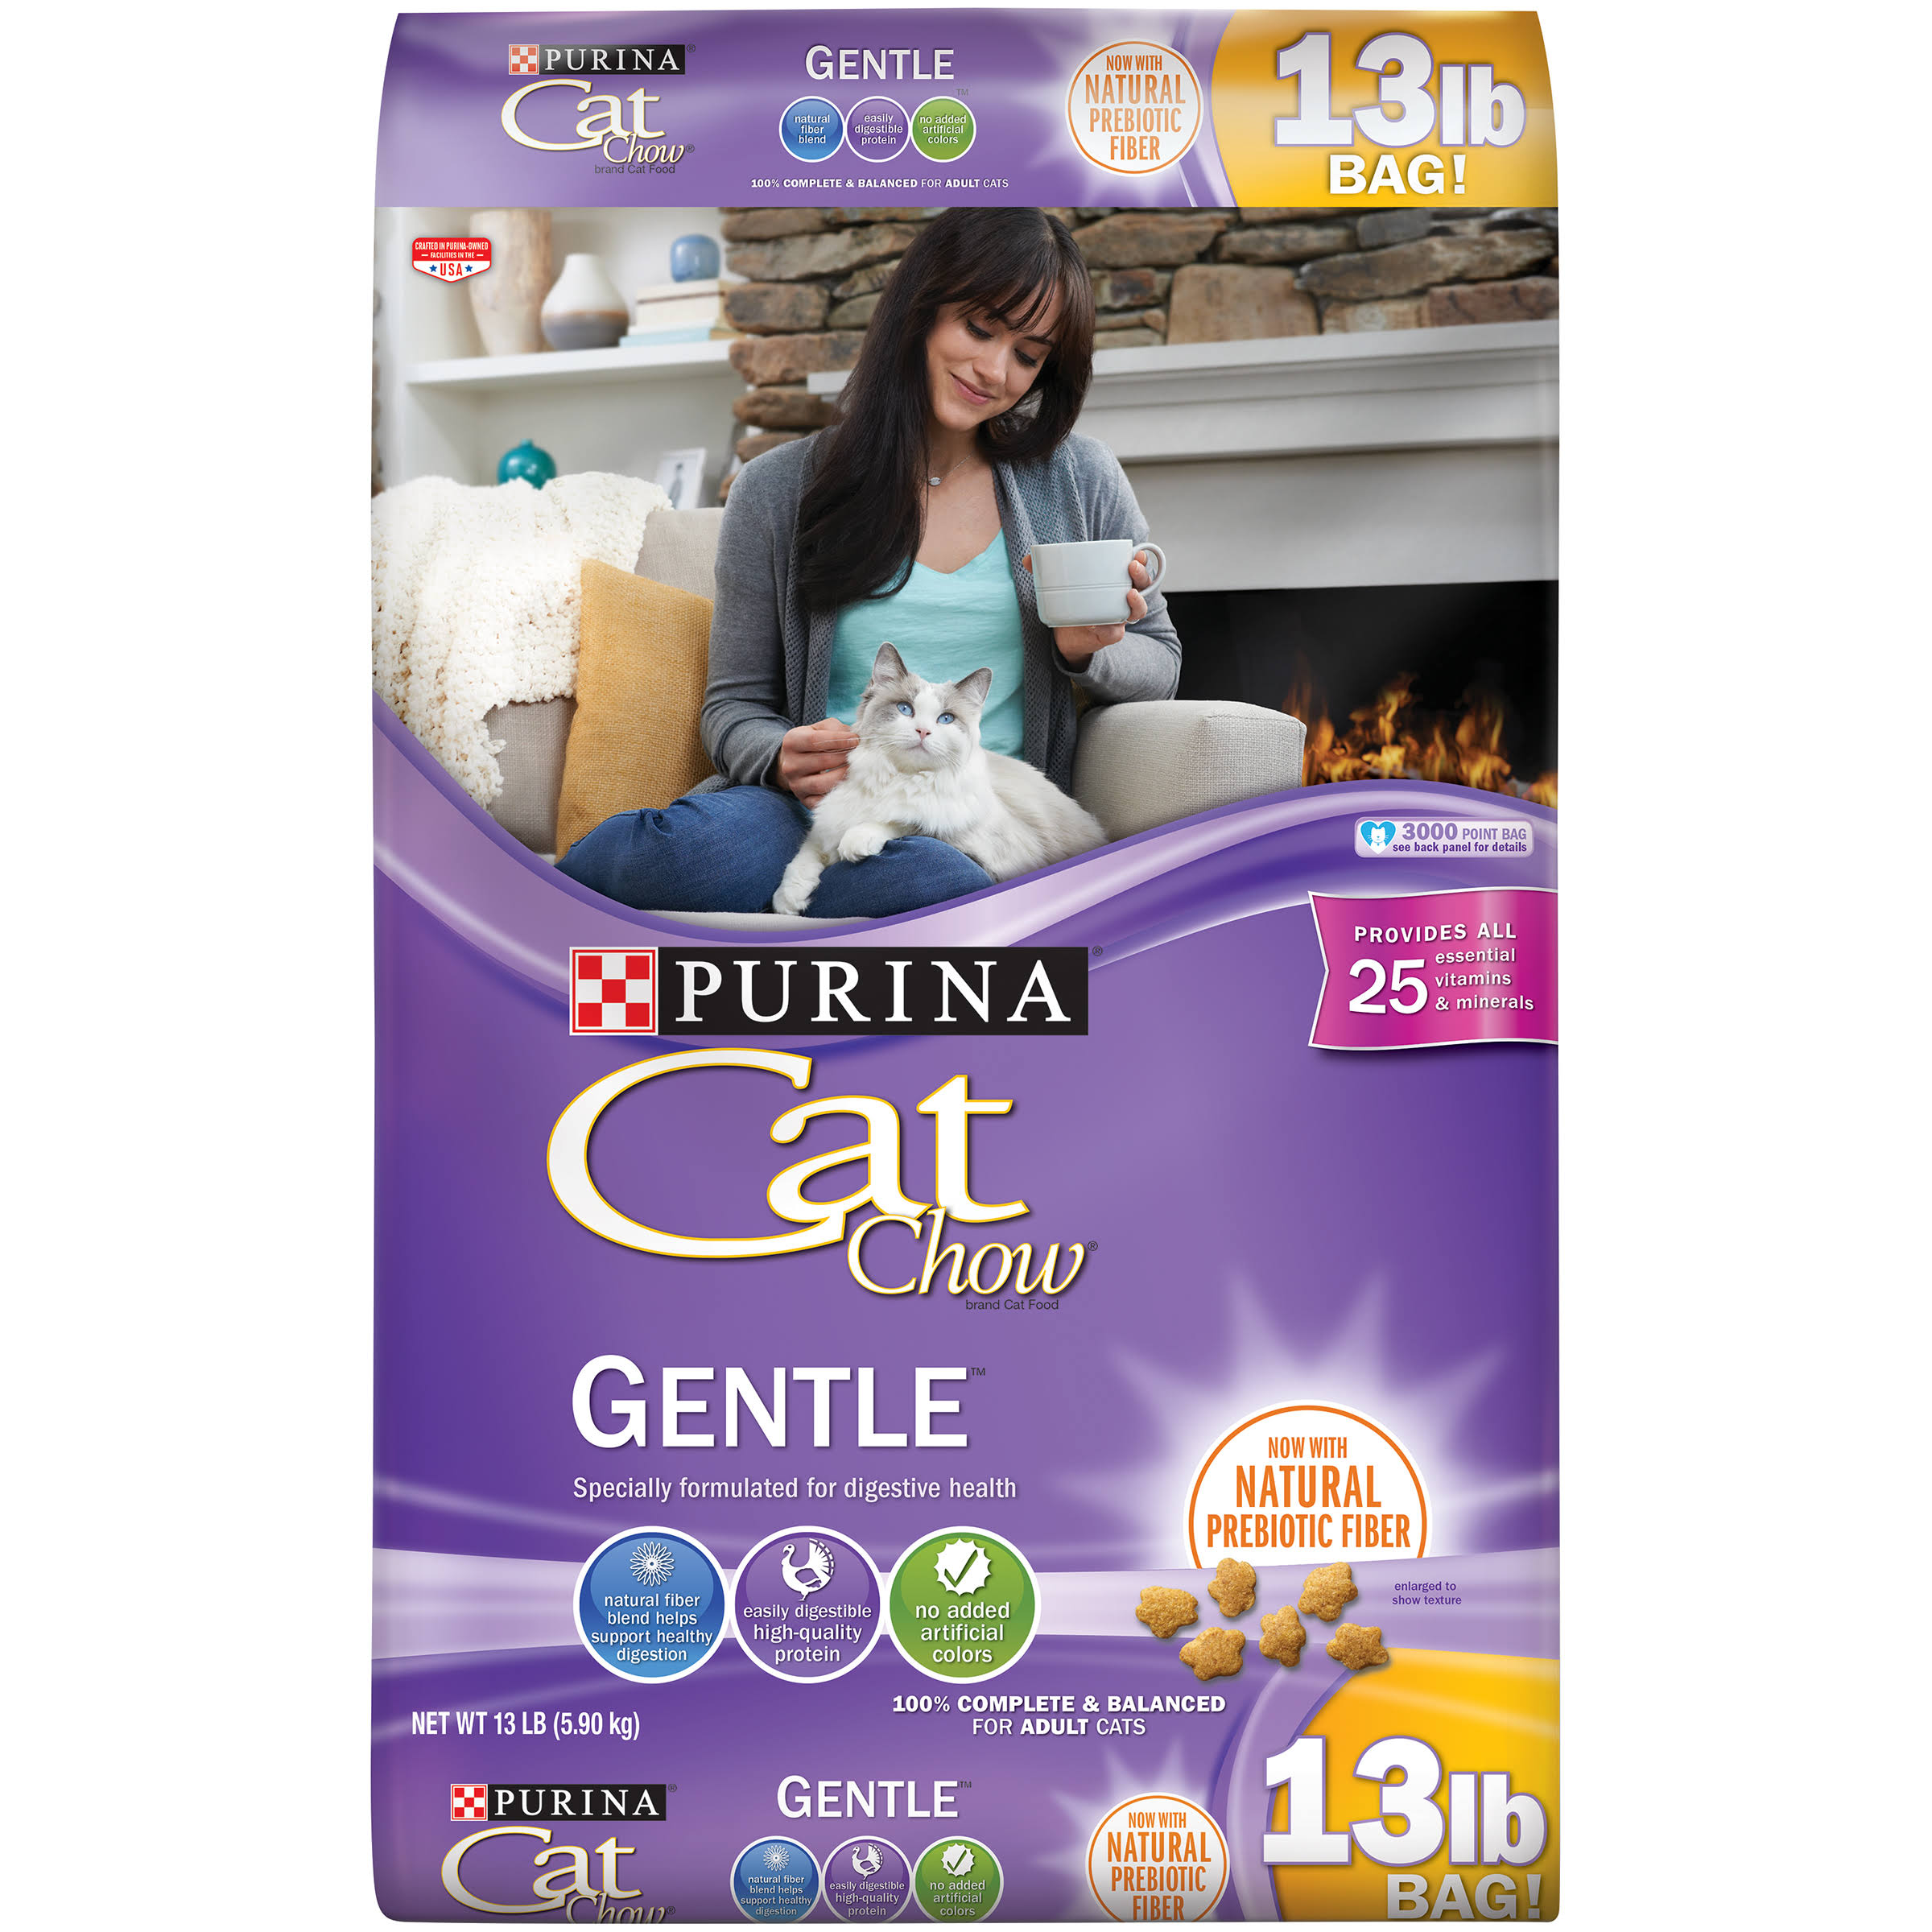 Purina Cat Chow Gentle Cat Food - 13lb